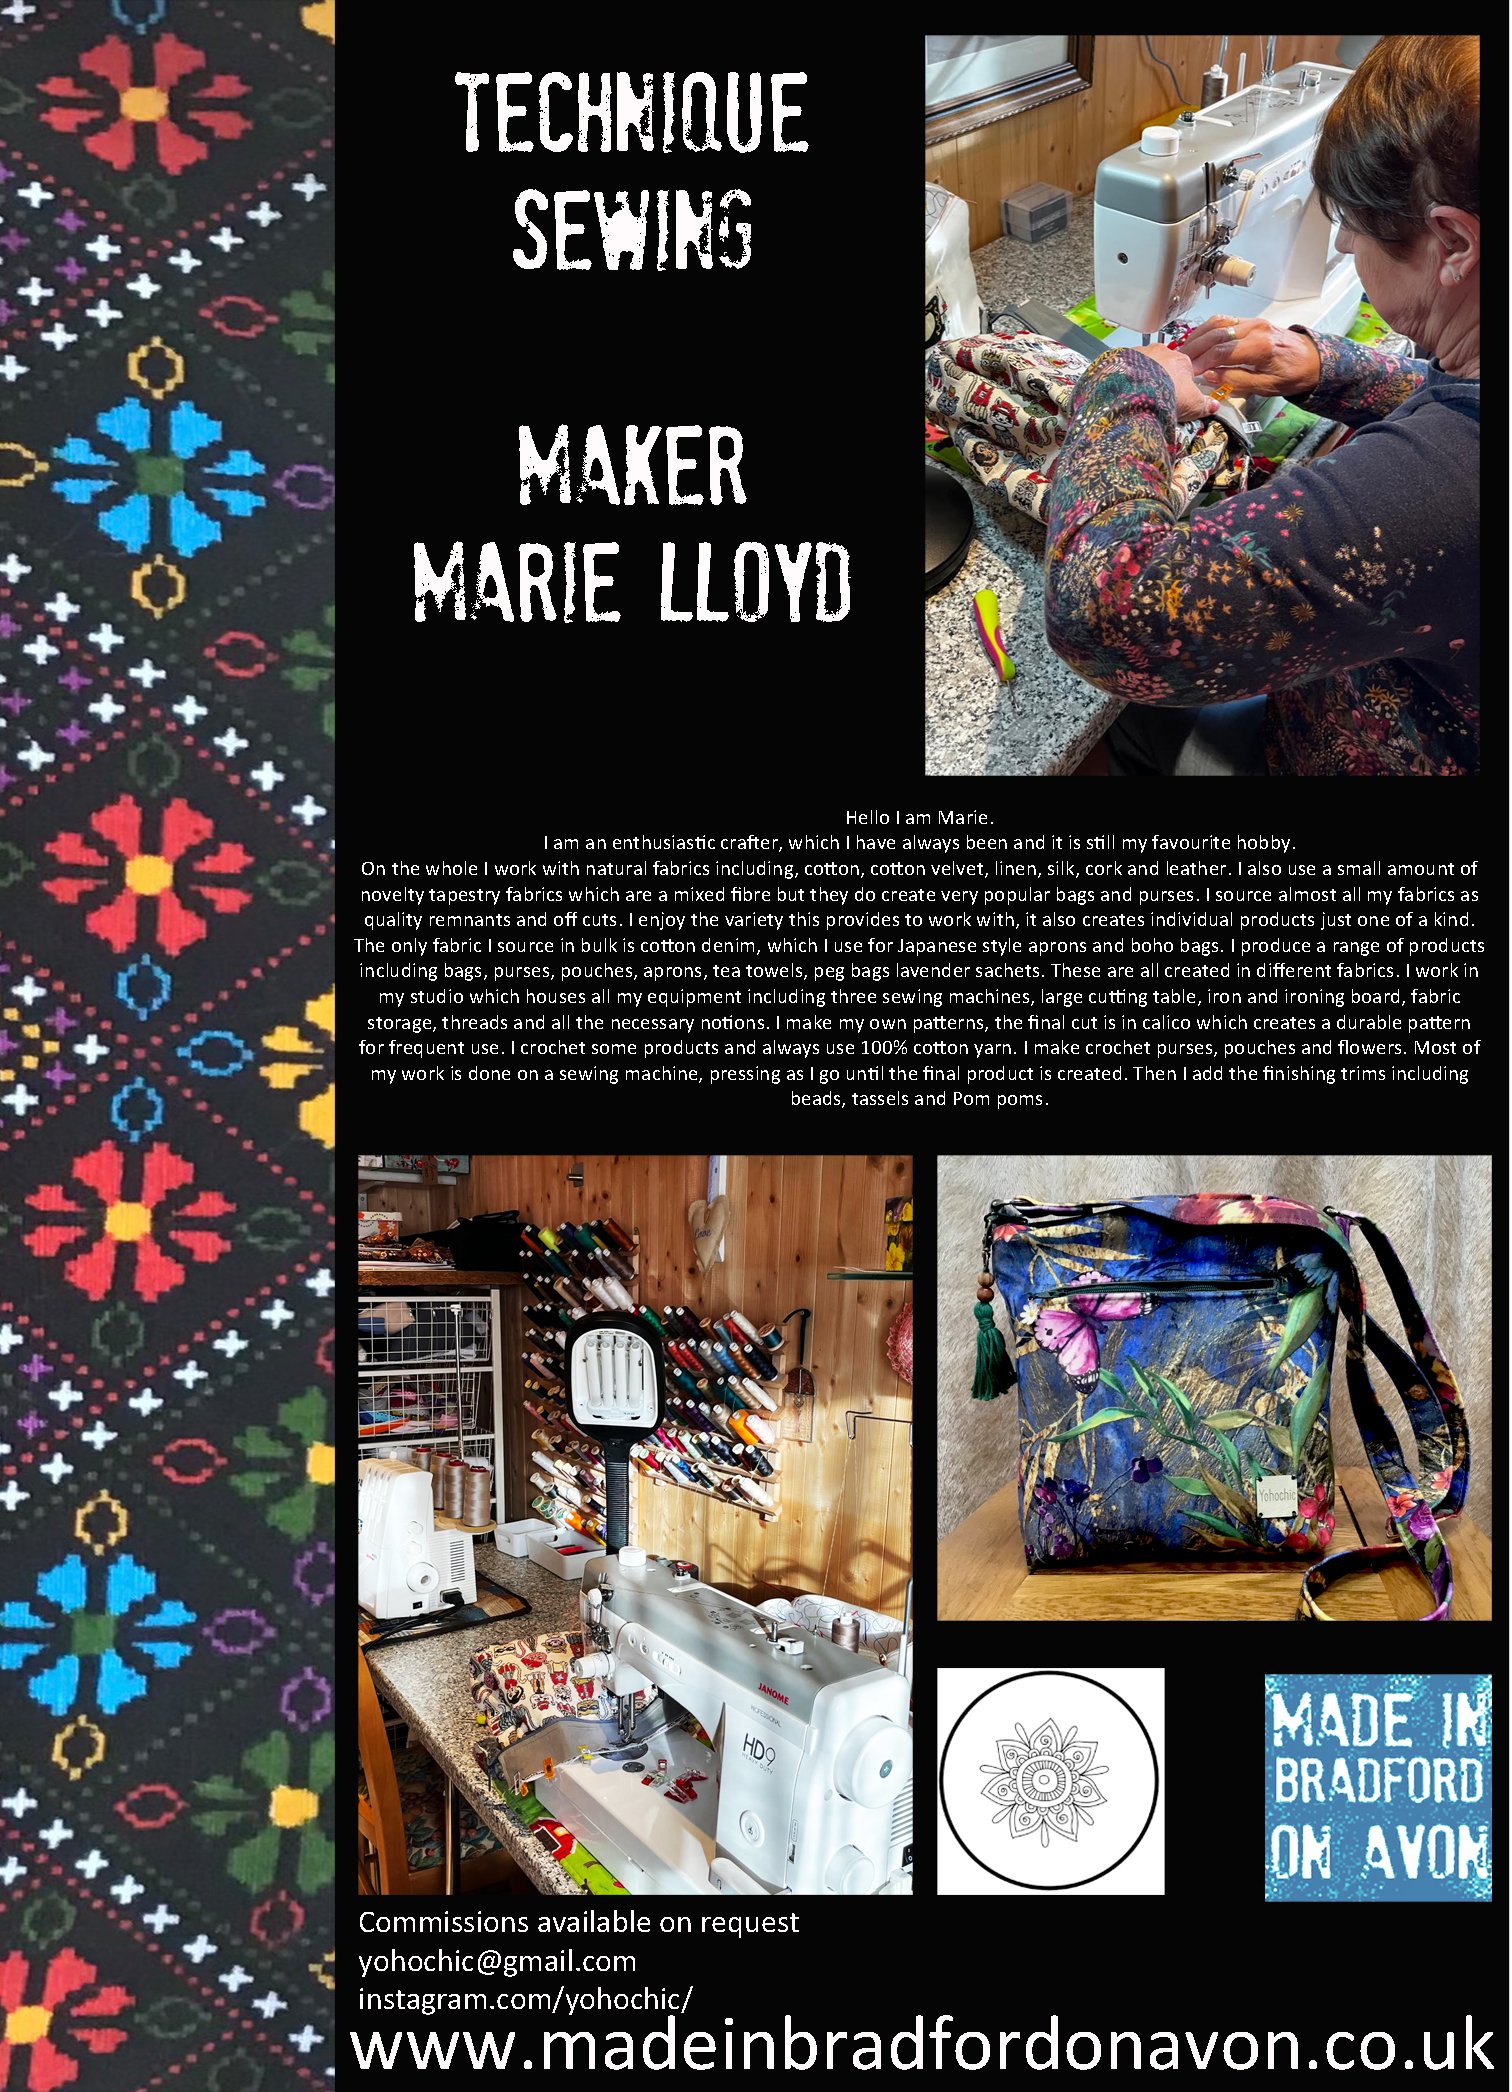 marie lloyd made in bradford on avon poster.jpg